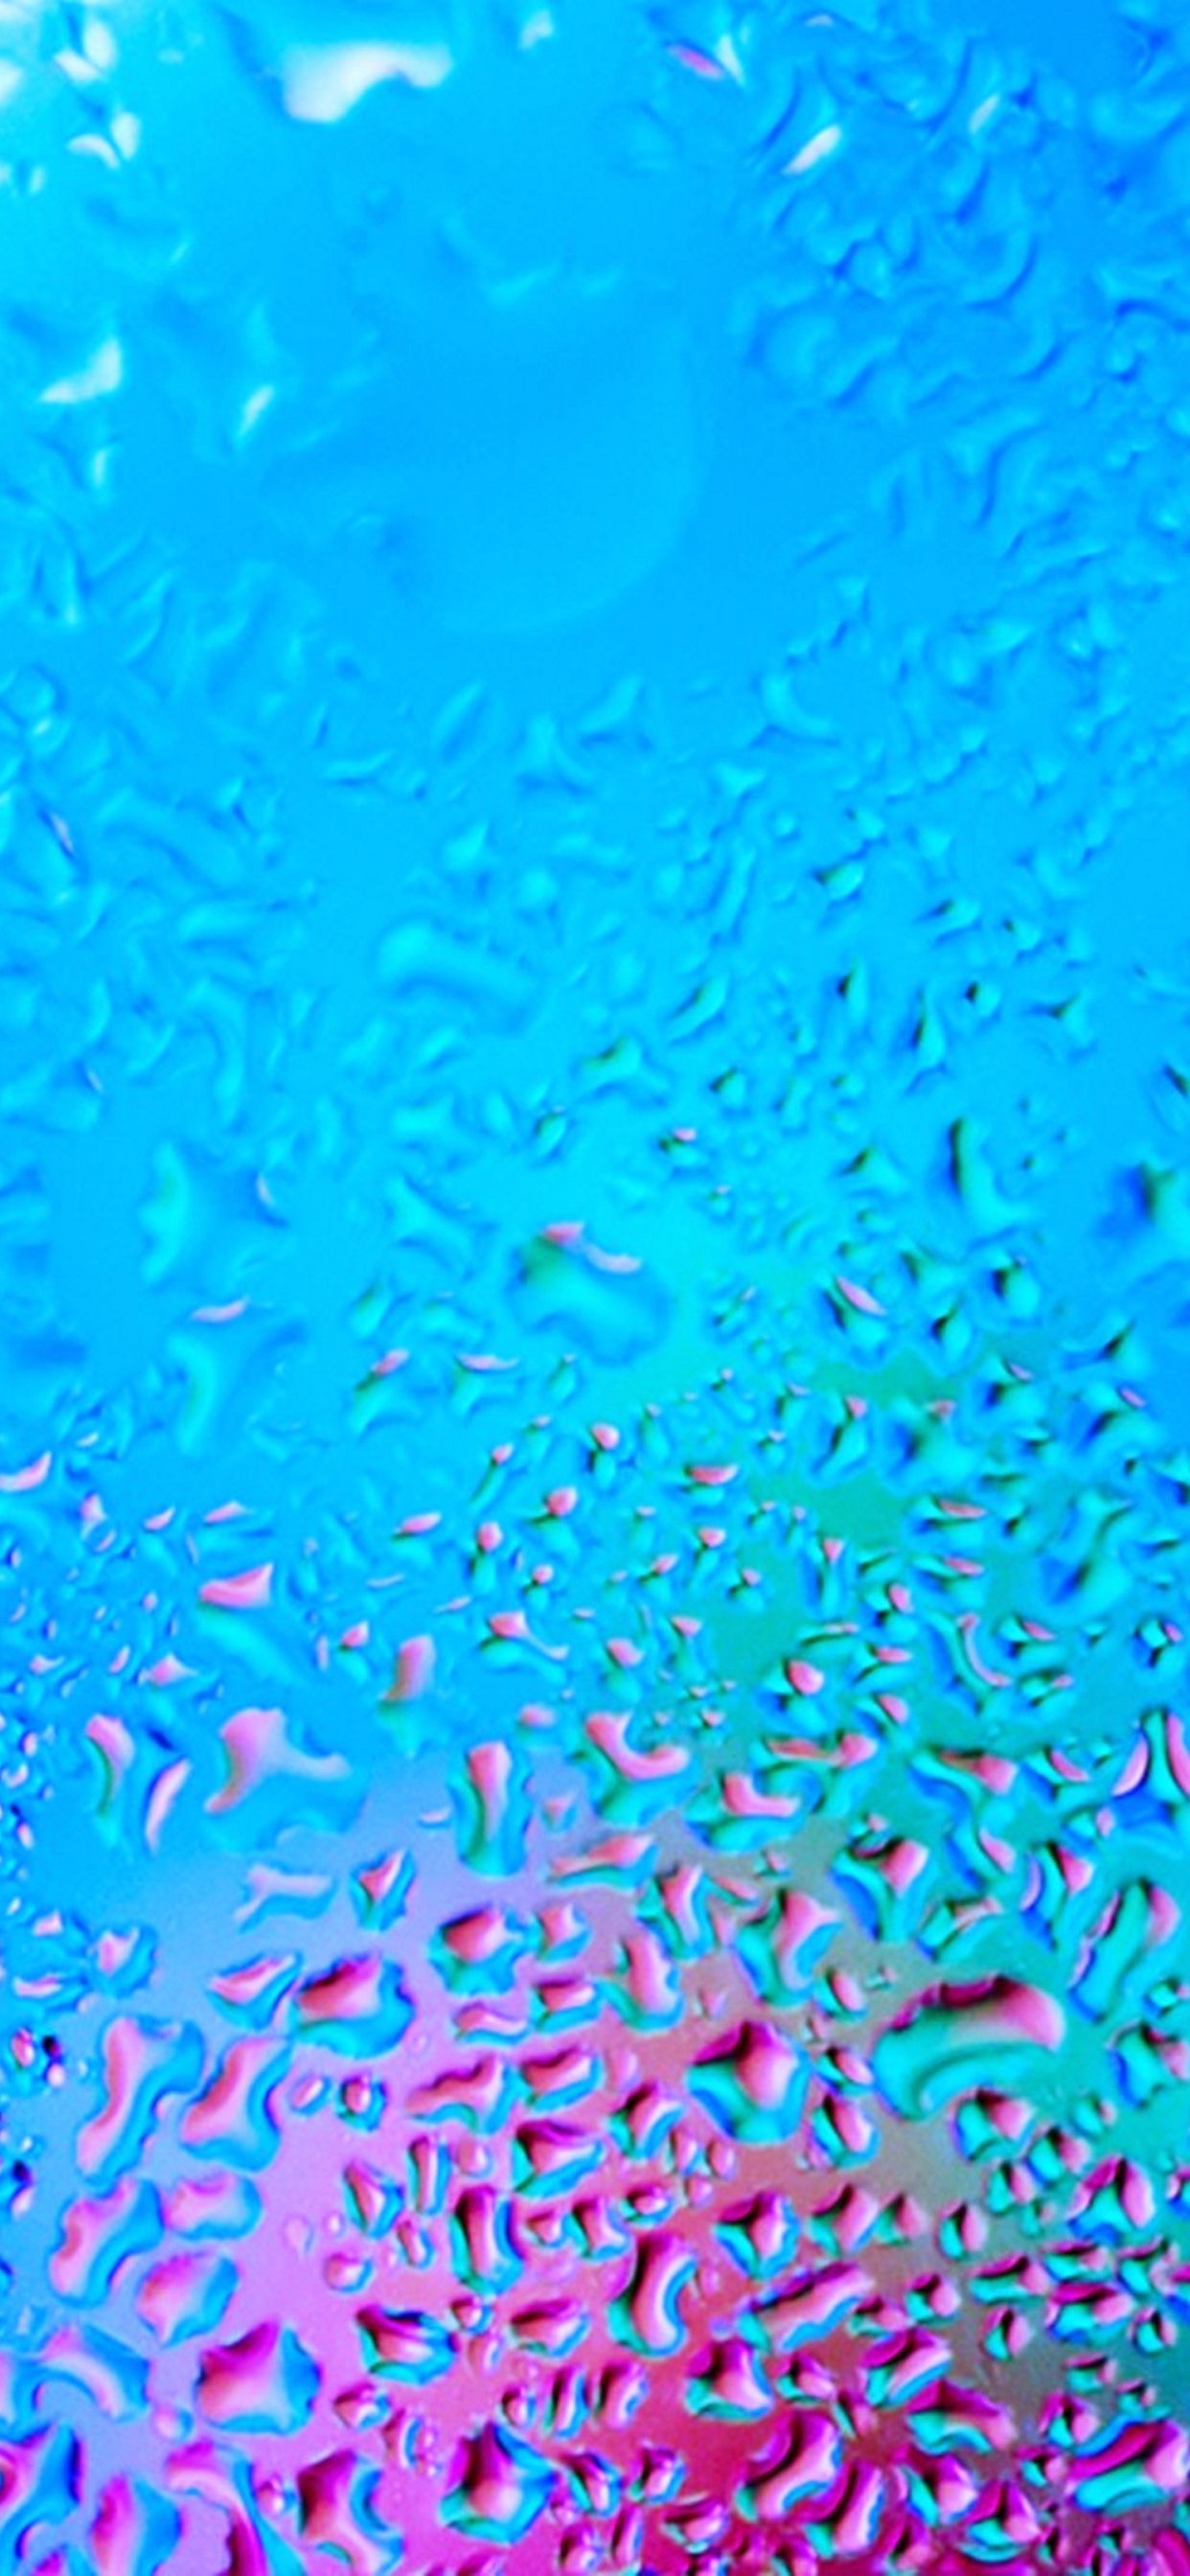 waterdrops-bright-hd-desktop-background